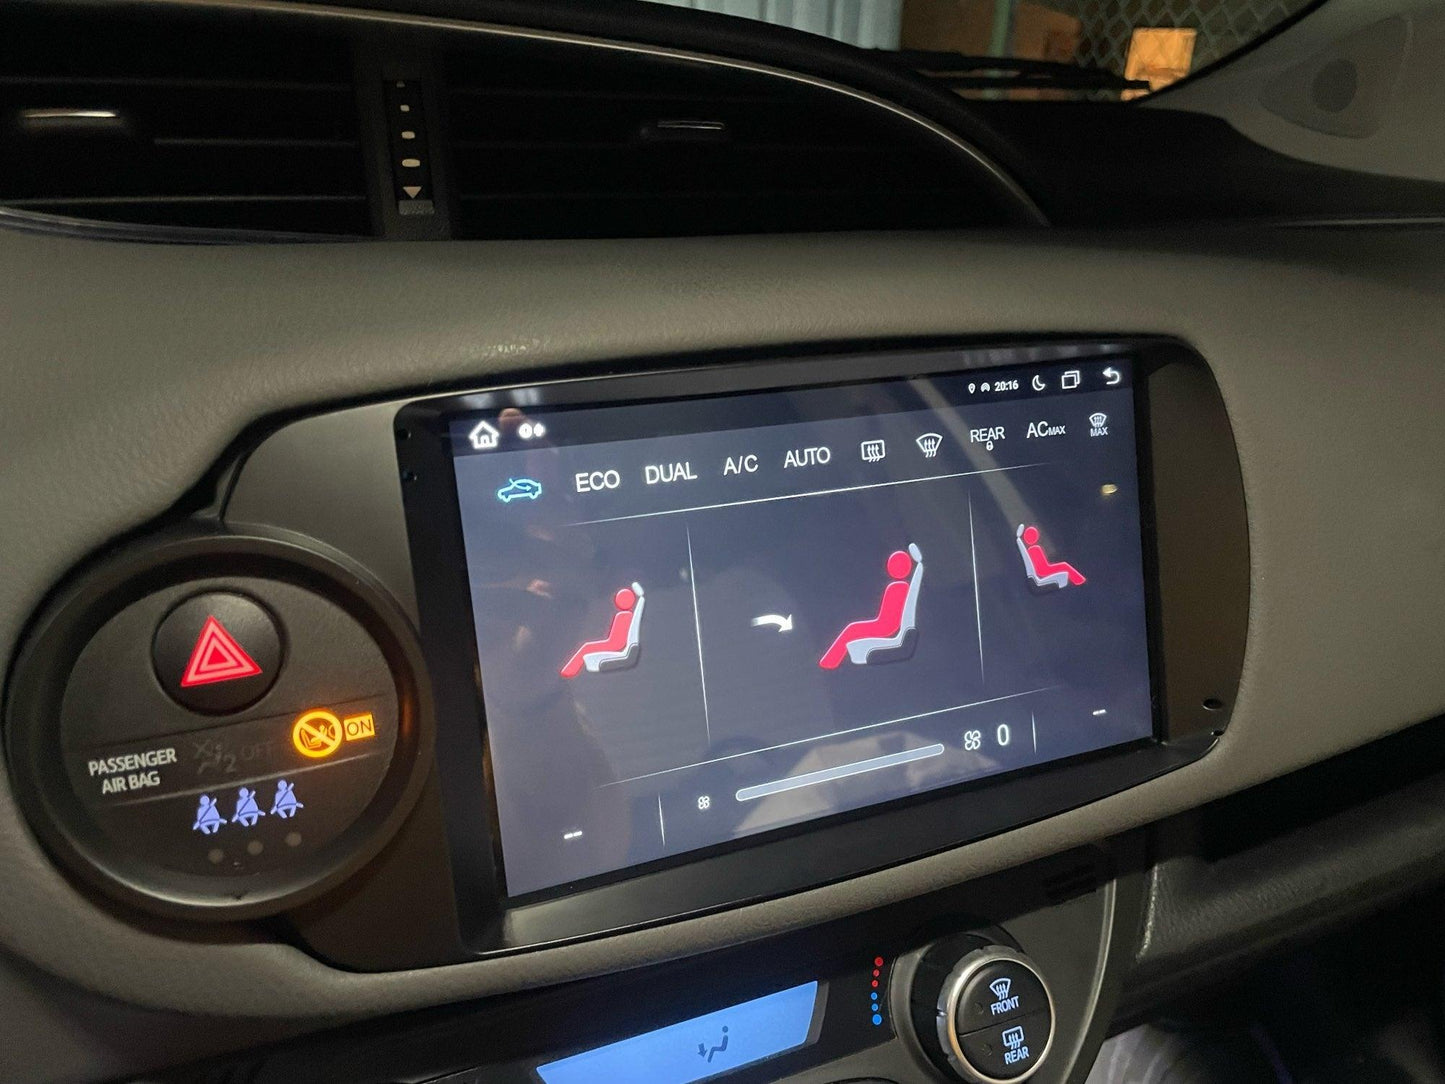 Radio nawigacja Toyota Yaris 2012-2017 Android Auto Carplay - Multigenus